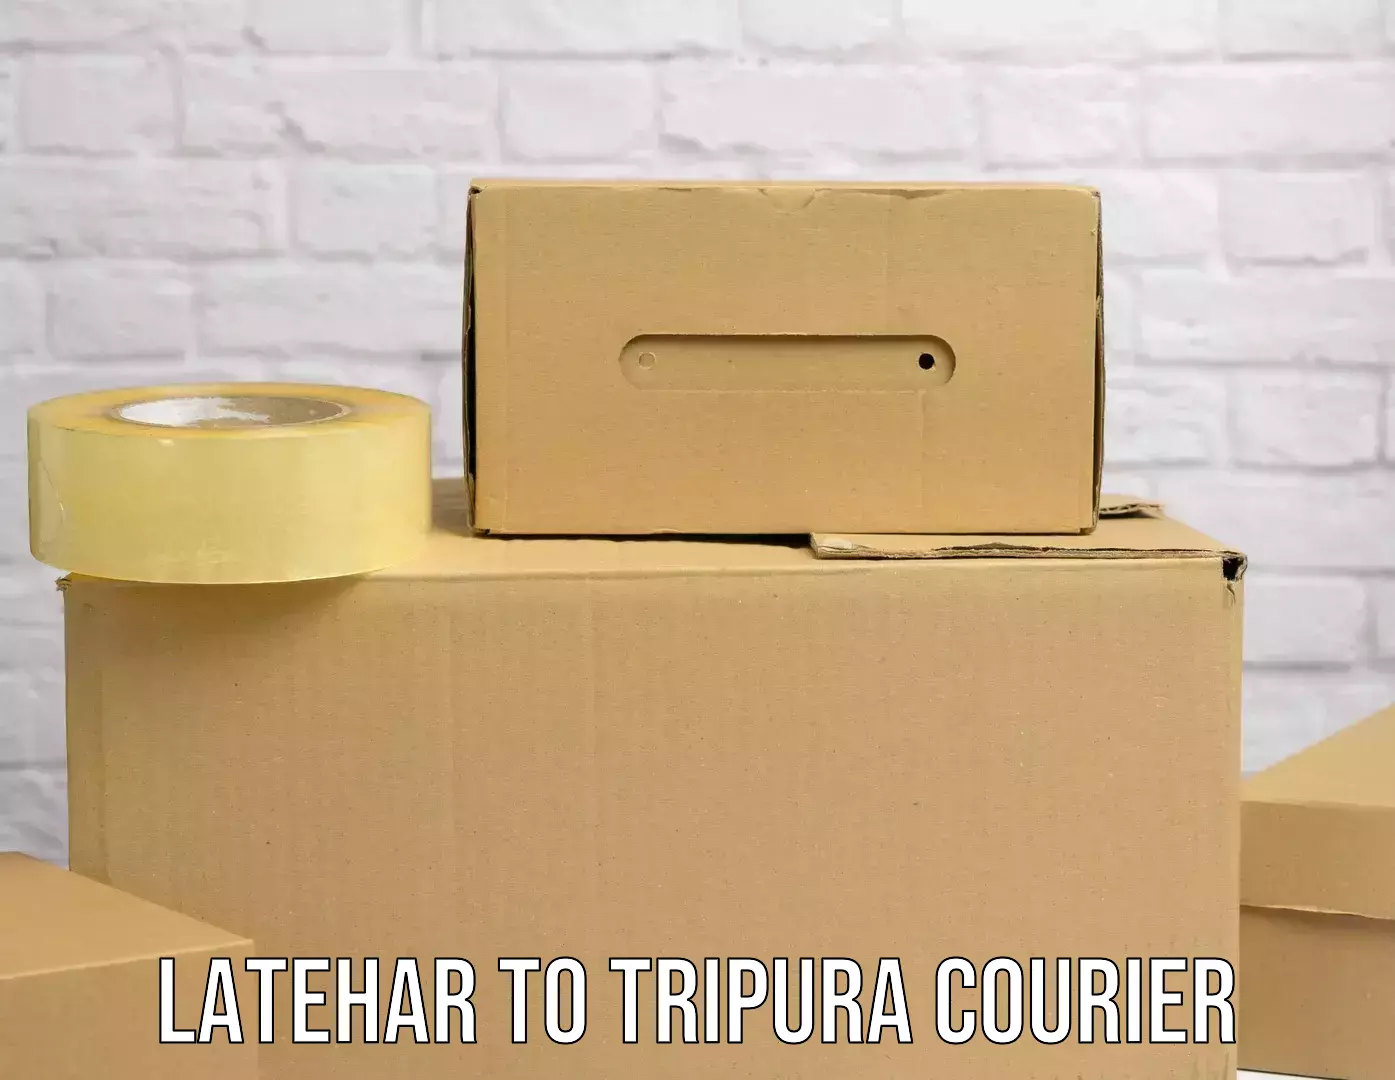 Courier service innovation Latehar to Tripura